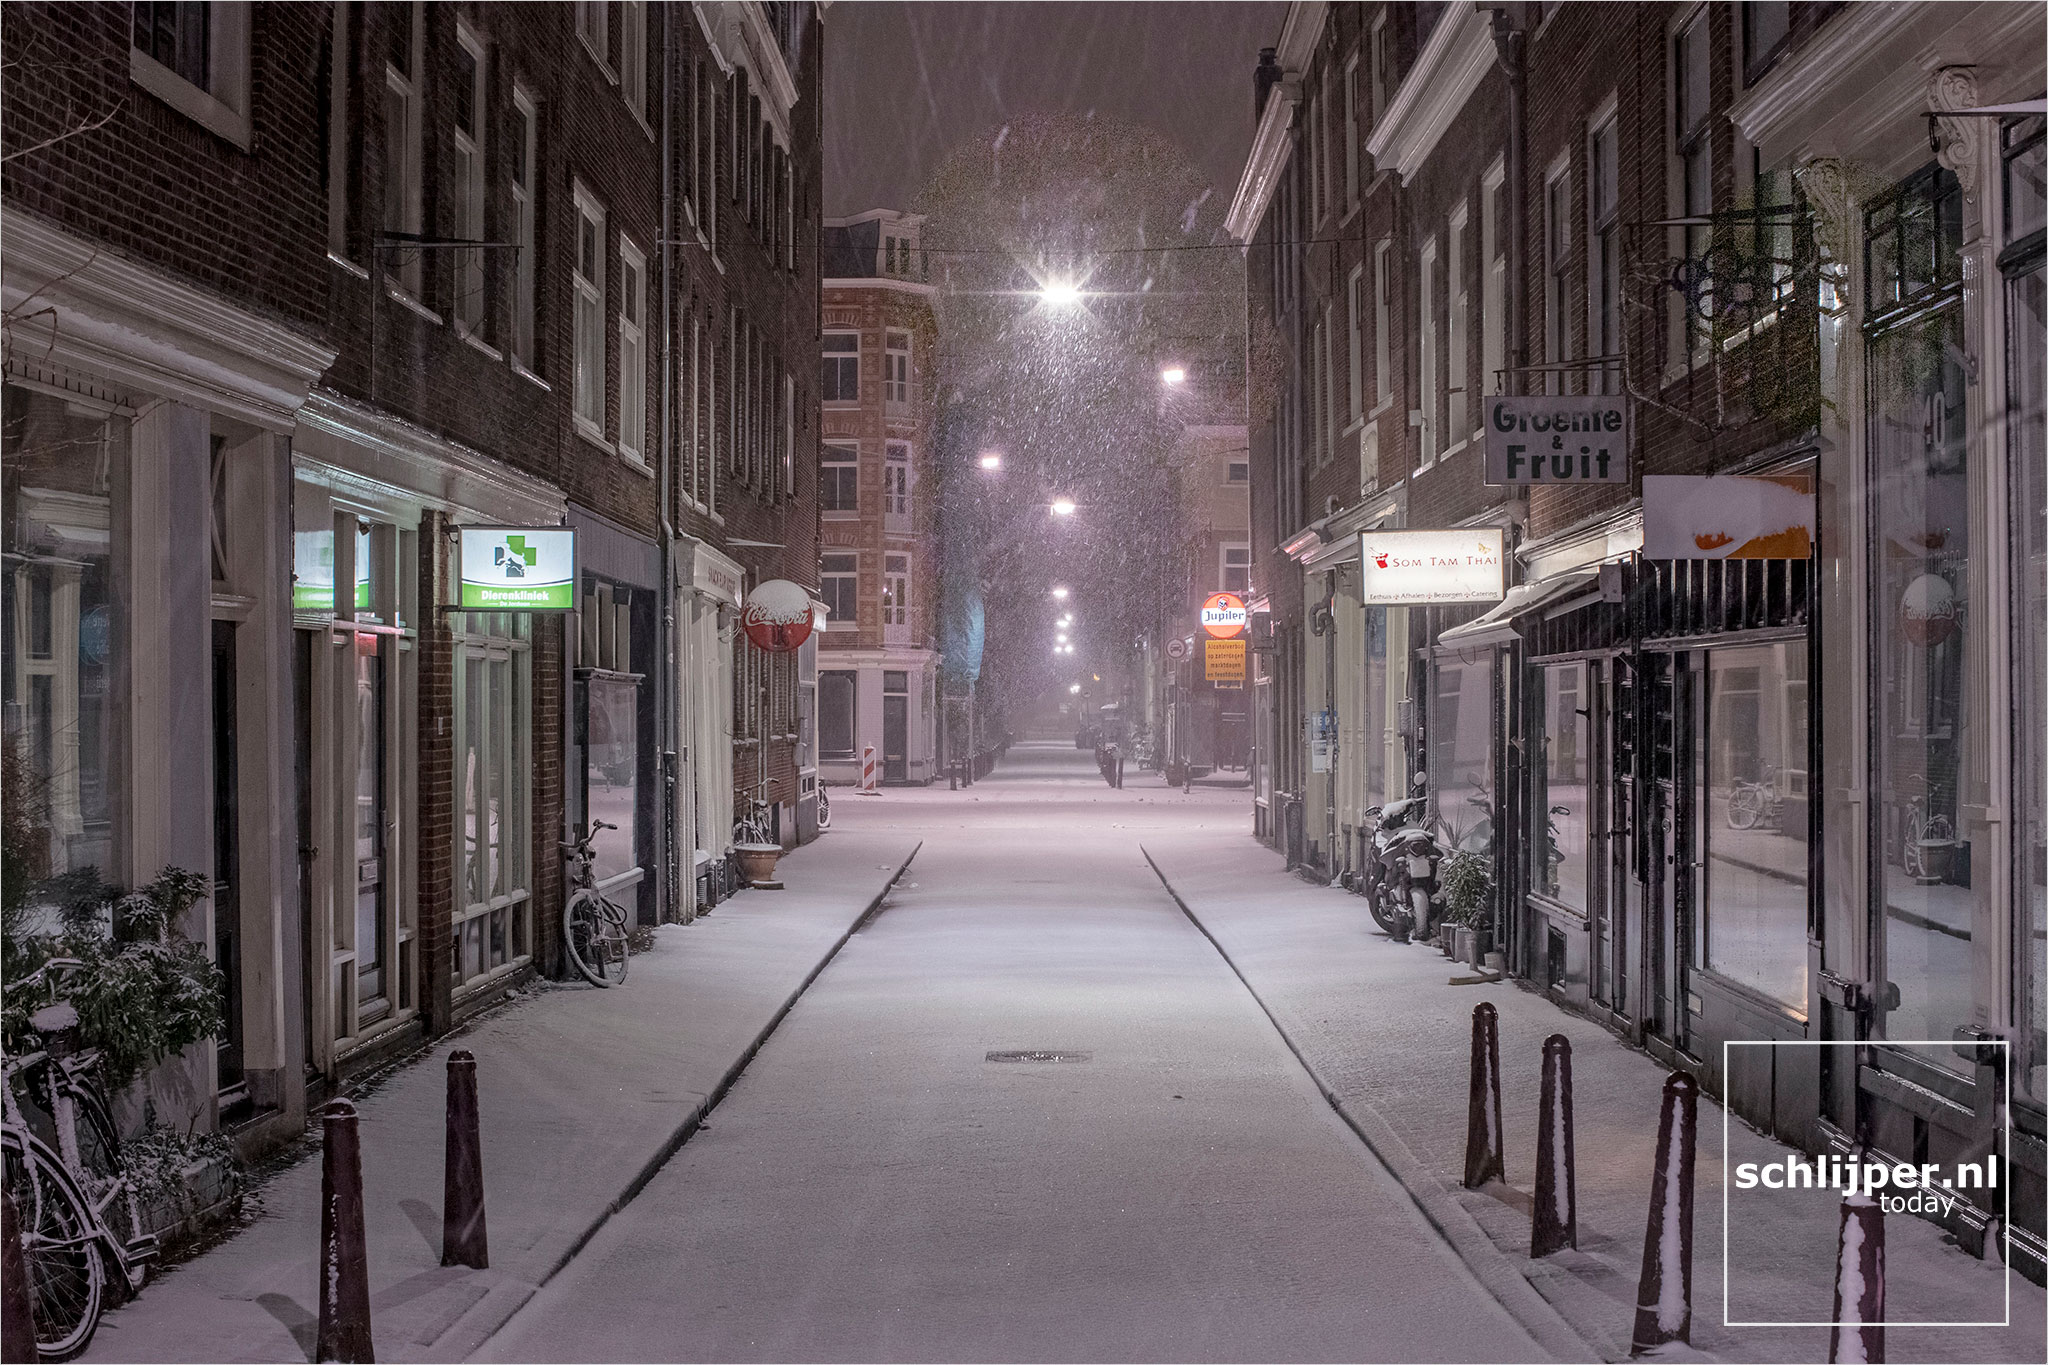 The Netherlands, Amsterdam, 7 februari 2021